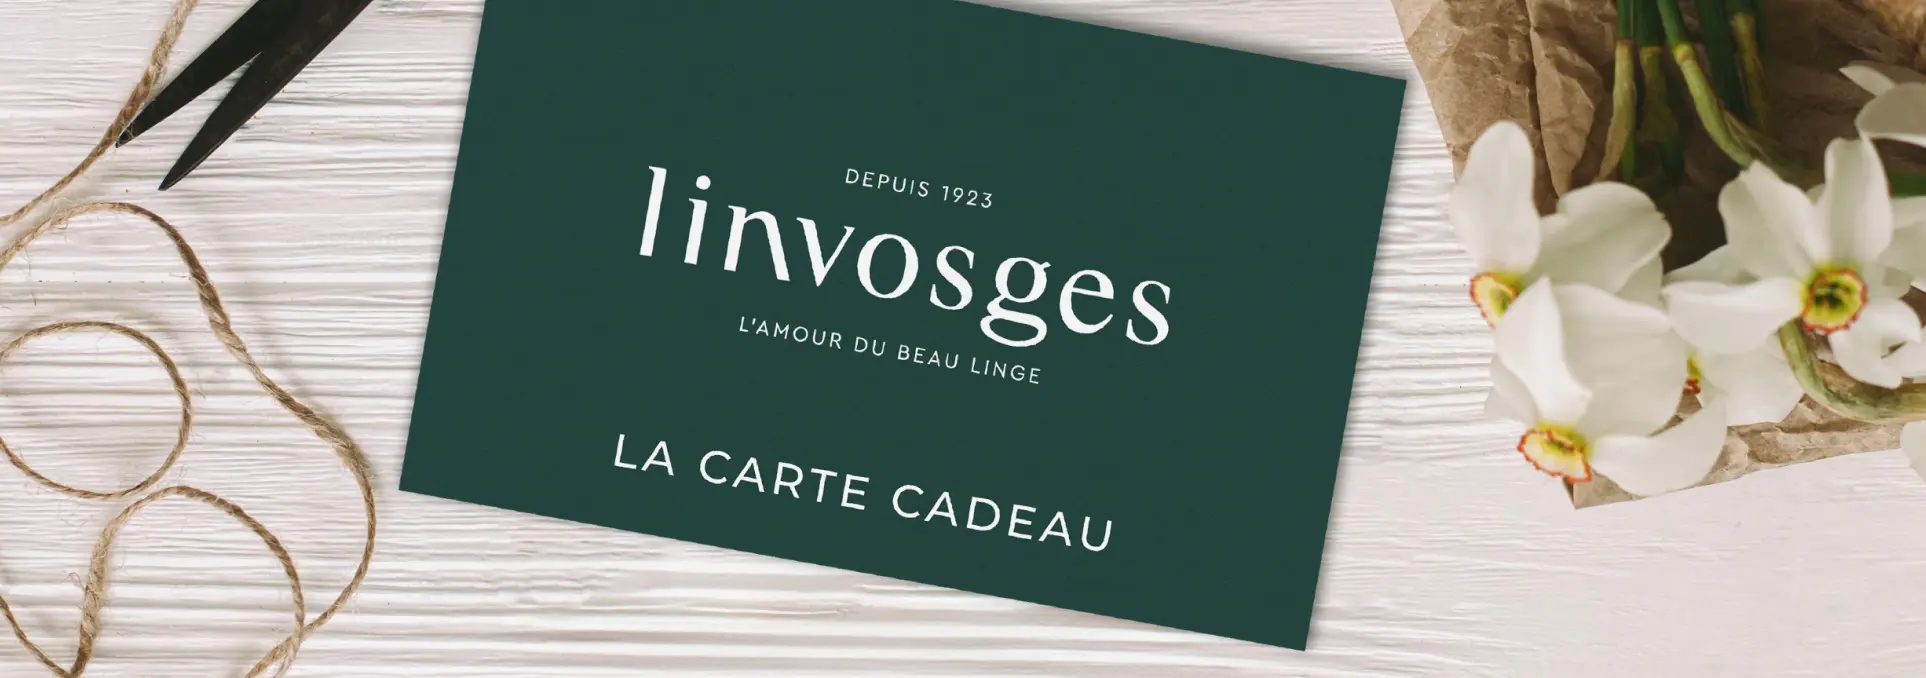 La carte cadeau Linvosges